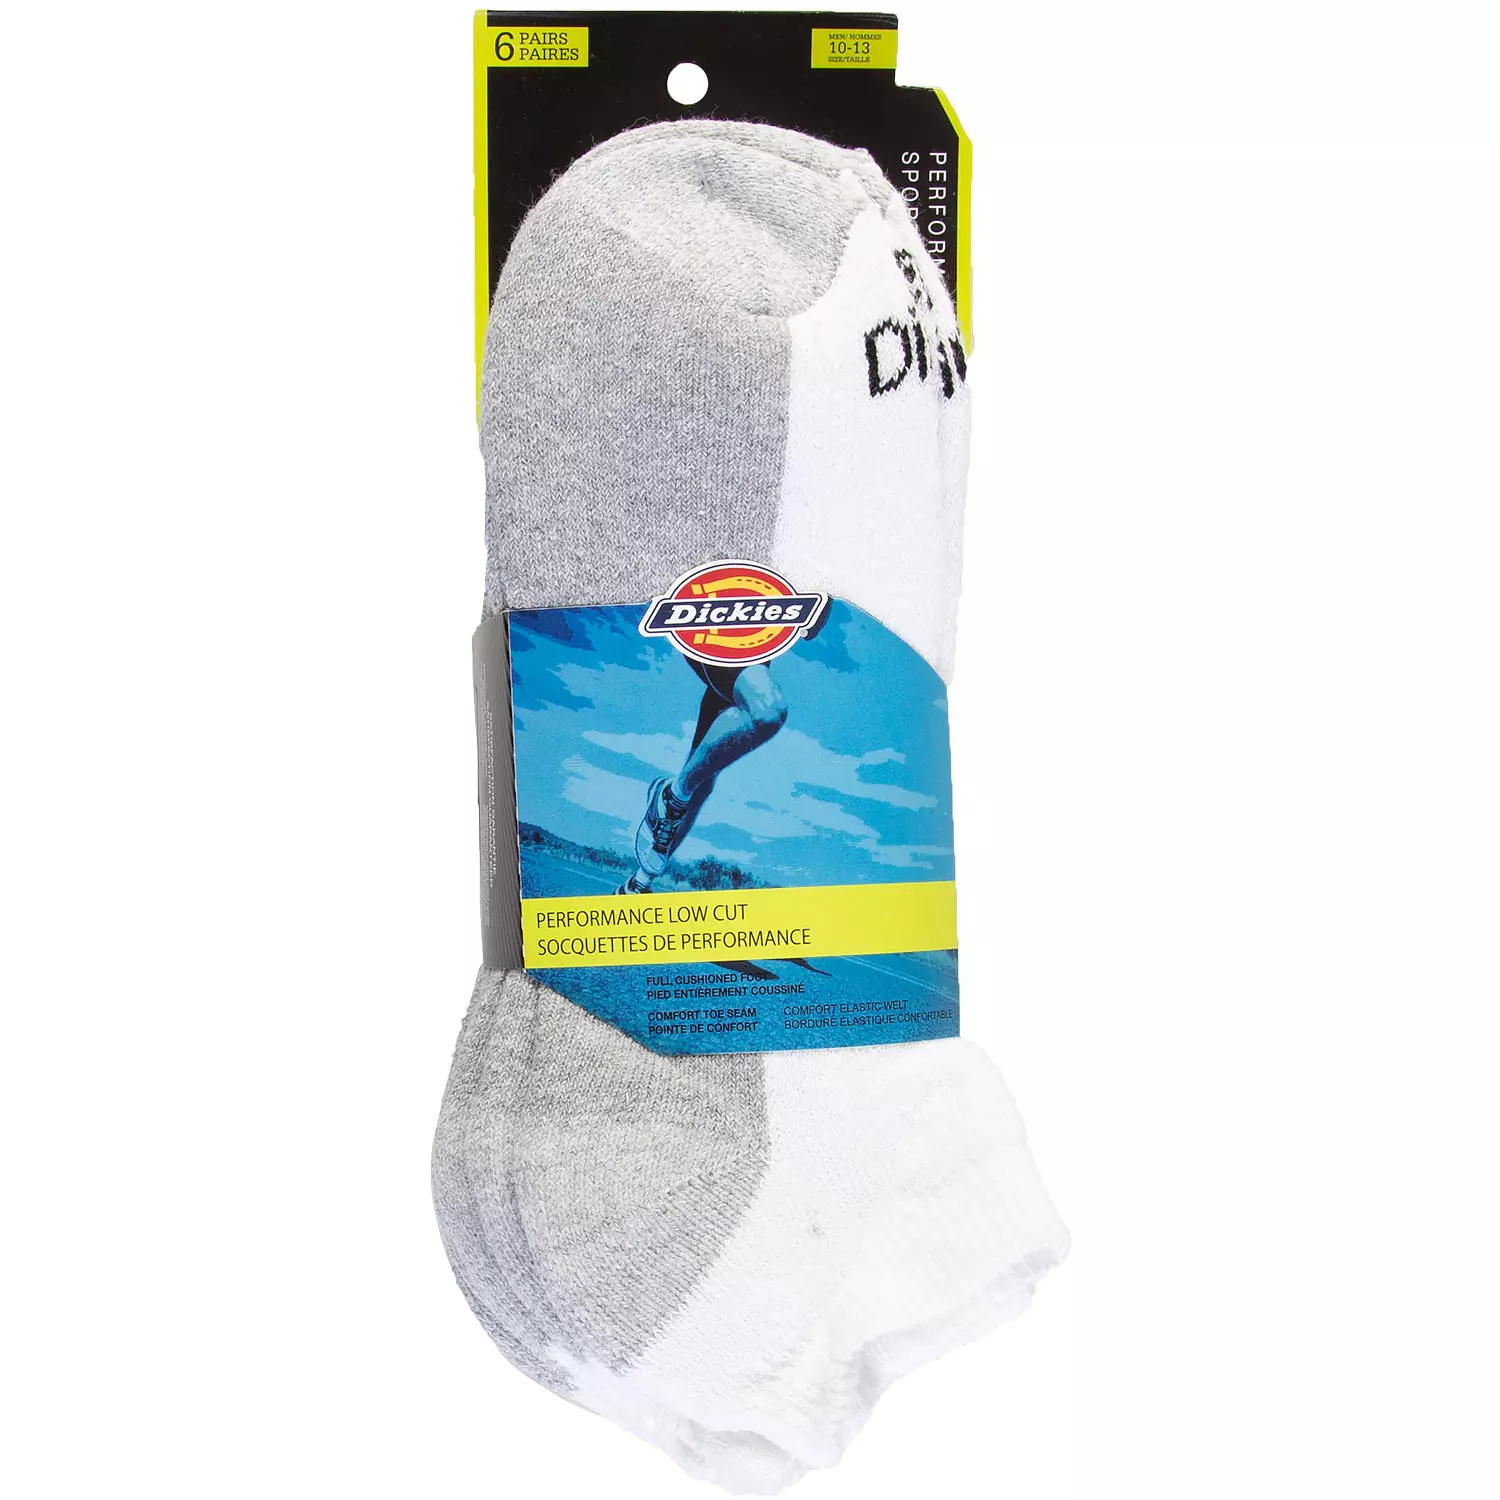 Dickies - Performance low cut socks, 6 pairs, white